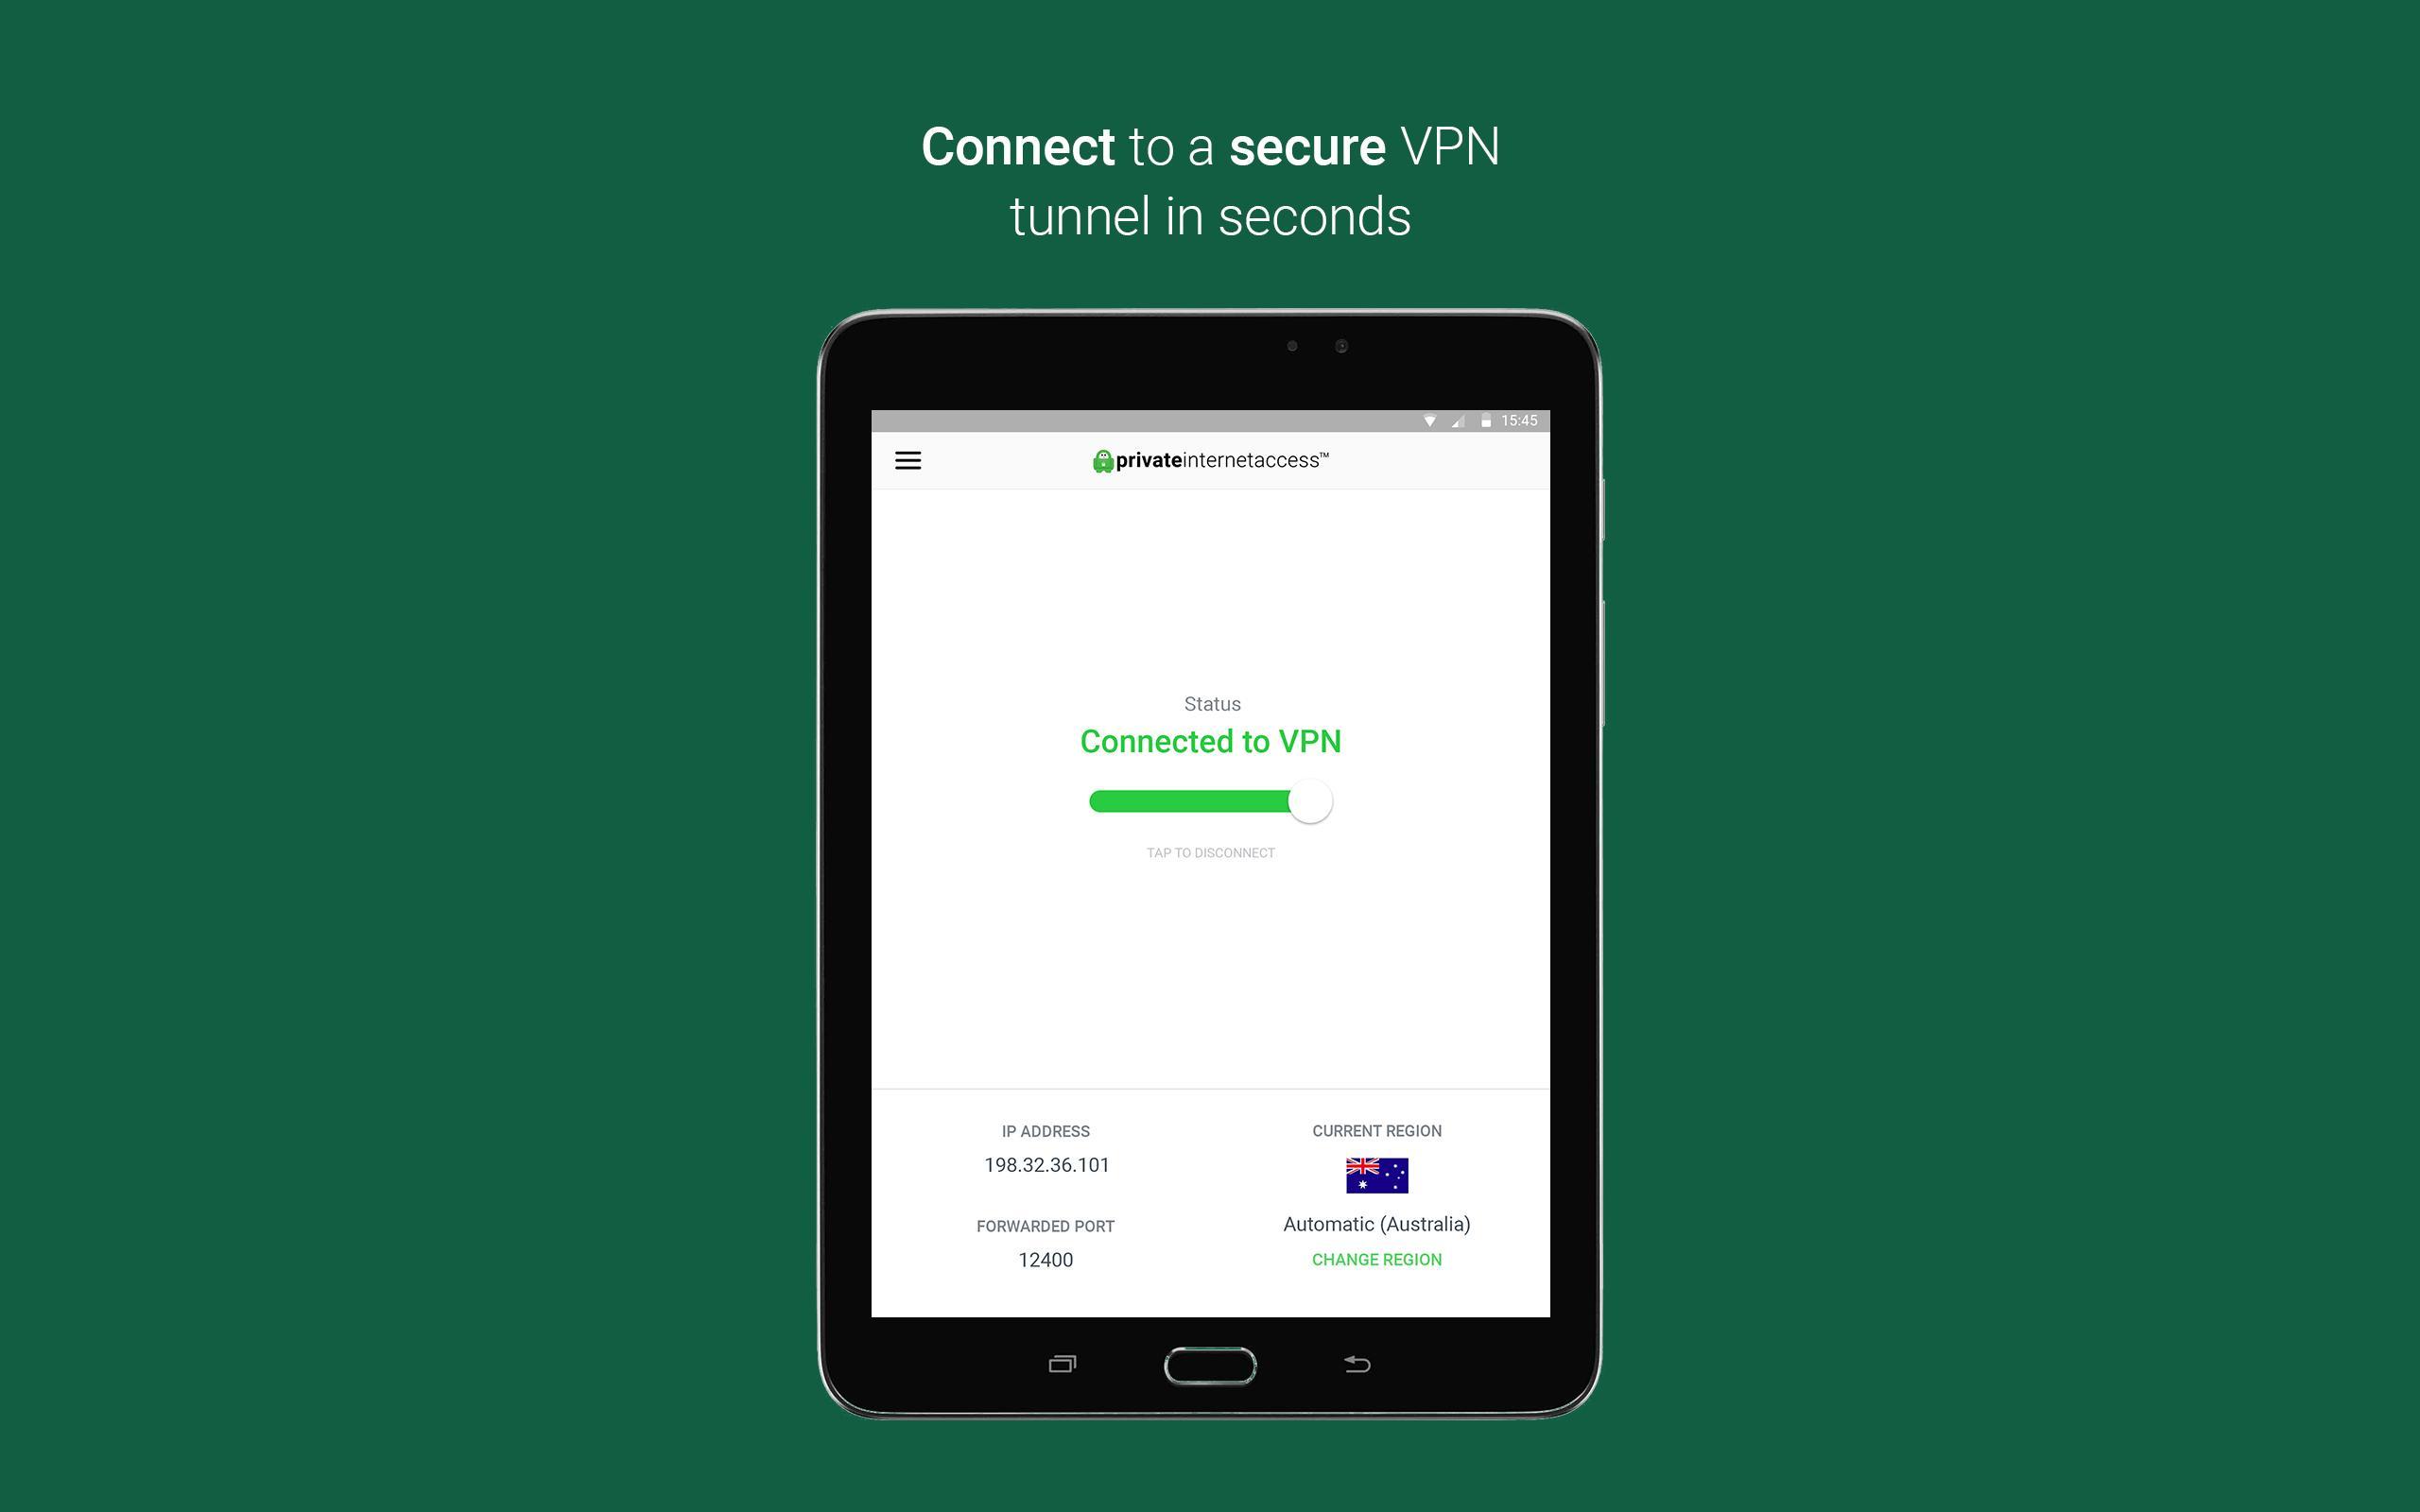 Private vpn access. Private Internet access VPN. Pia VPN. Private Internet access Android. Private Internet access.